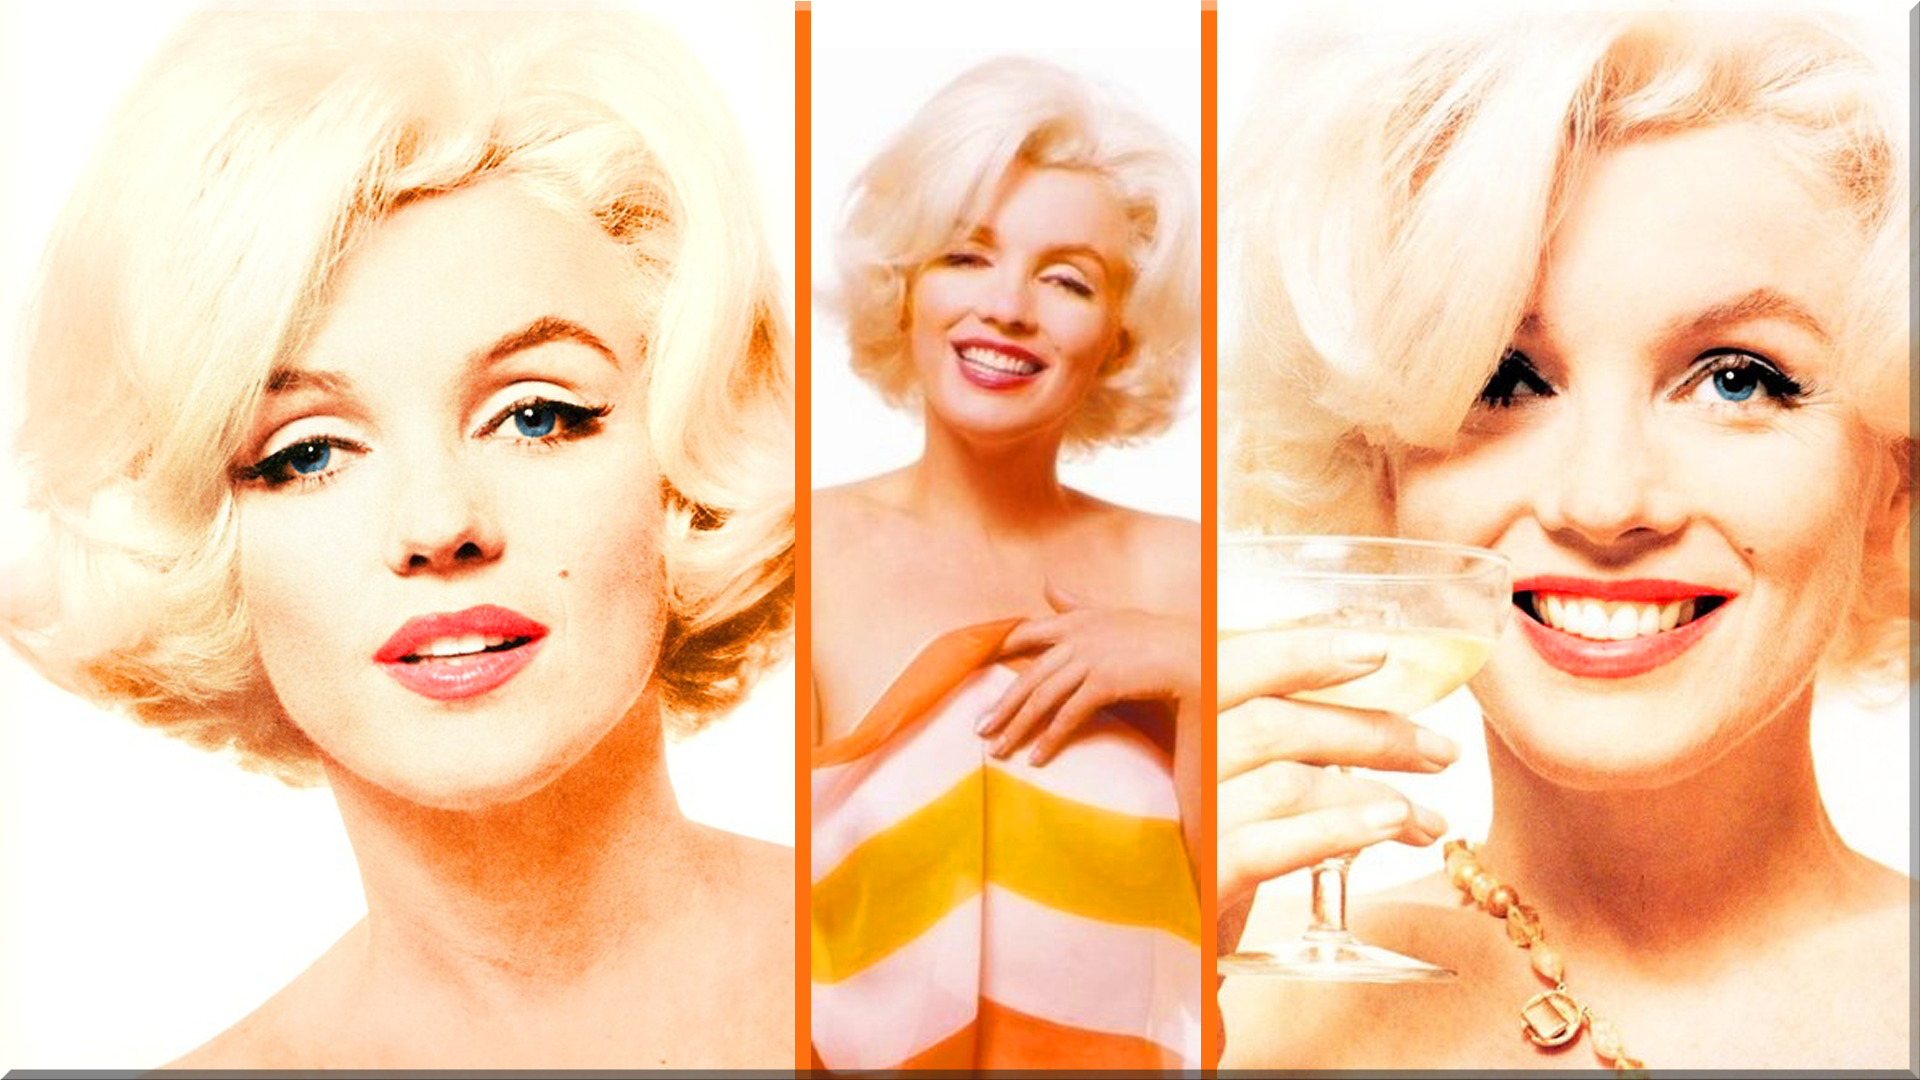 Marilyn Monroe Image HD Wallpaper And